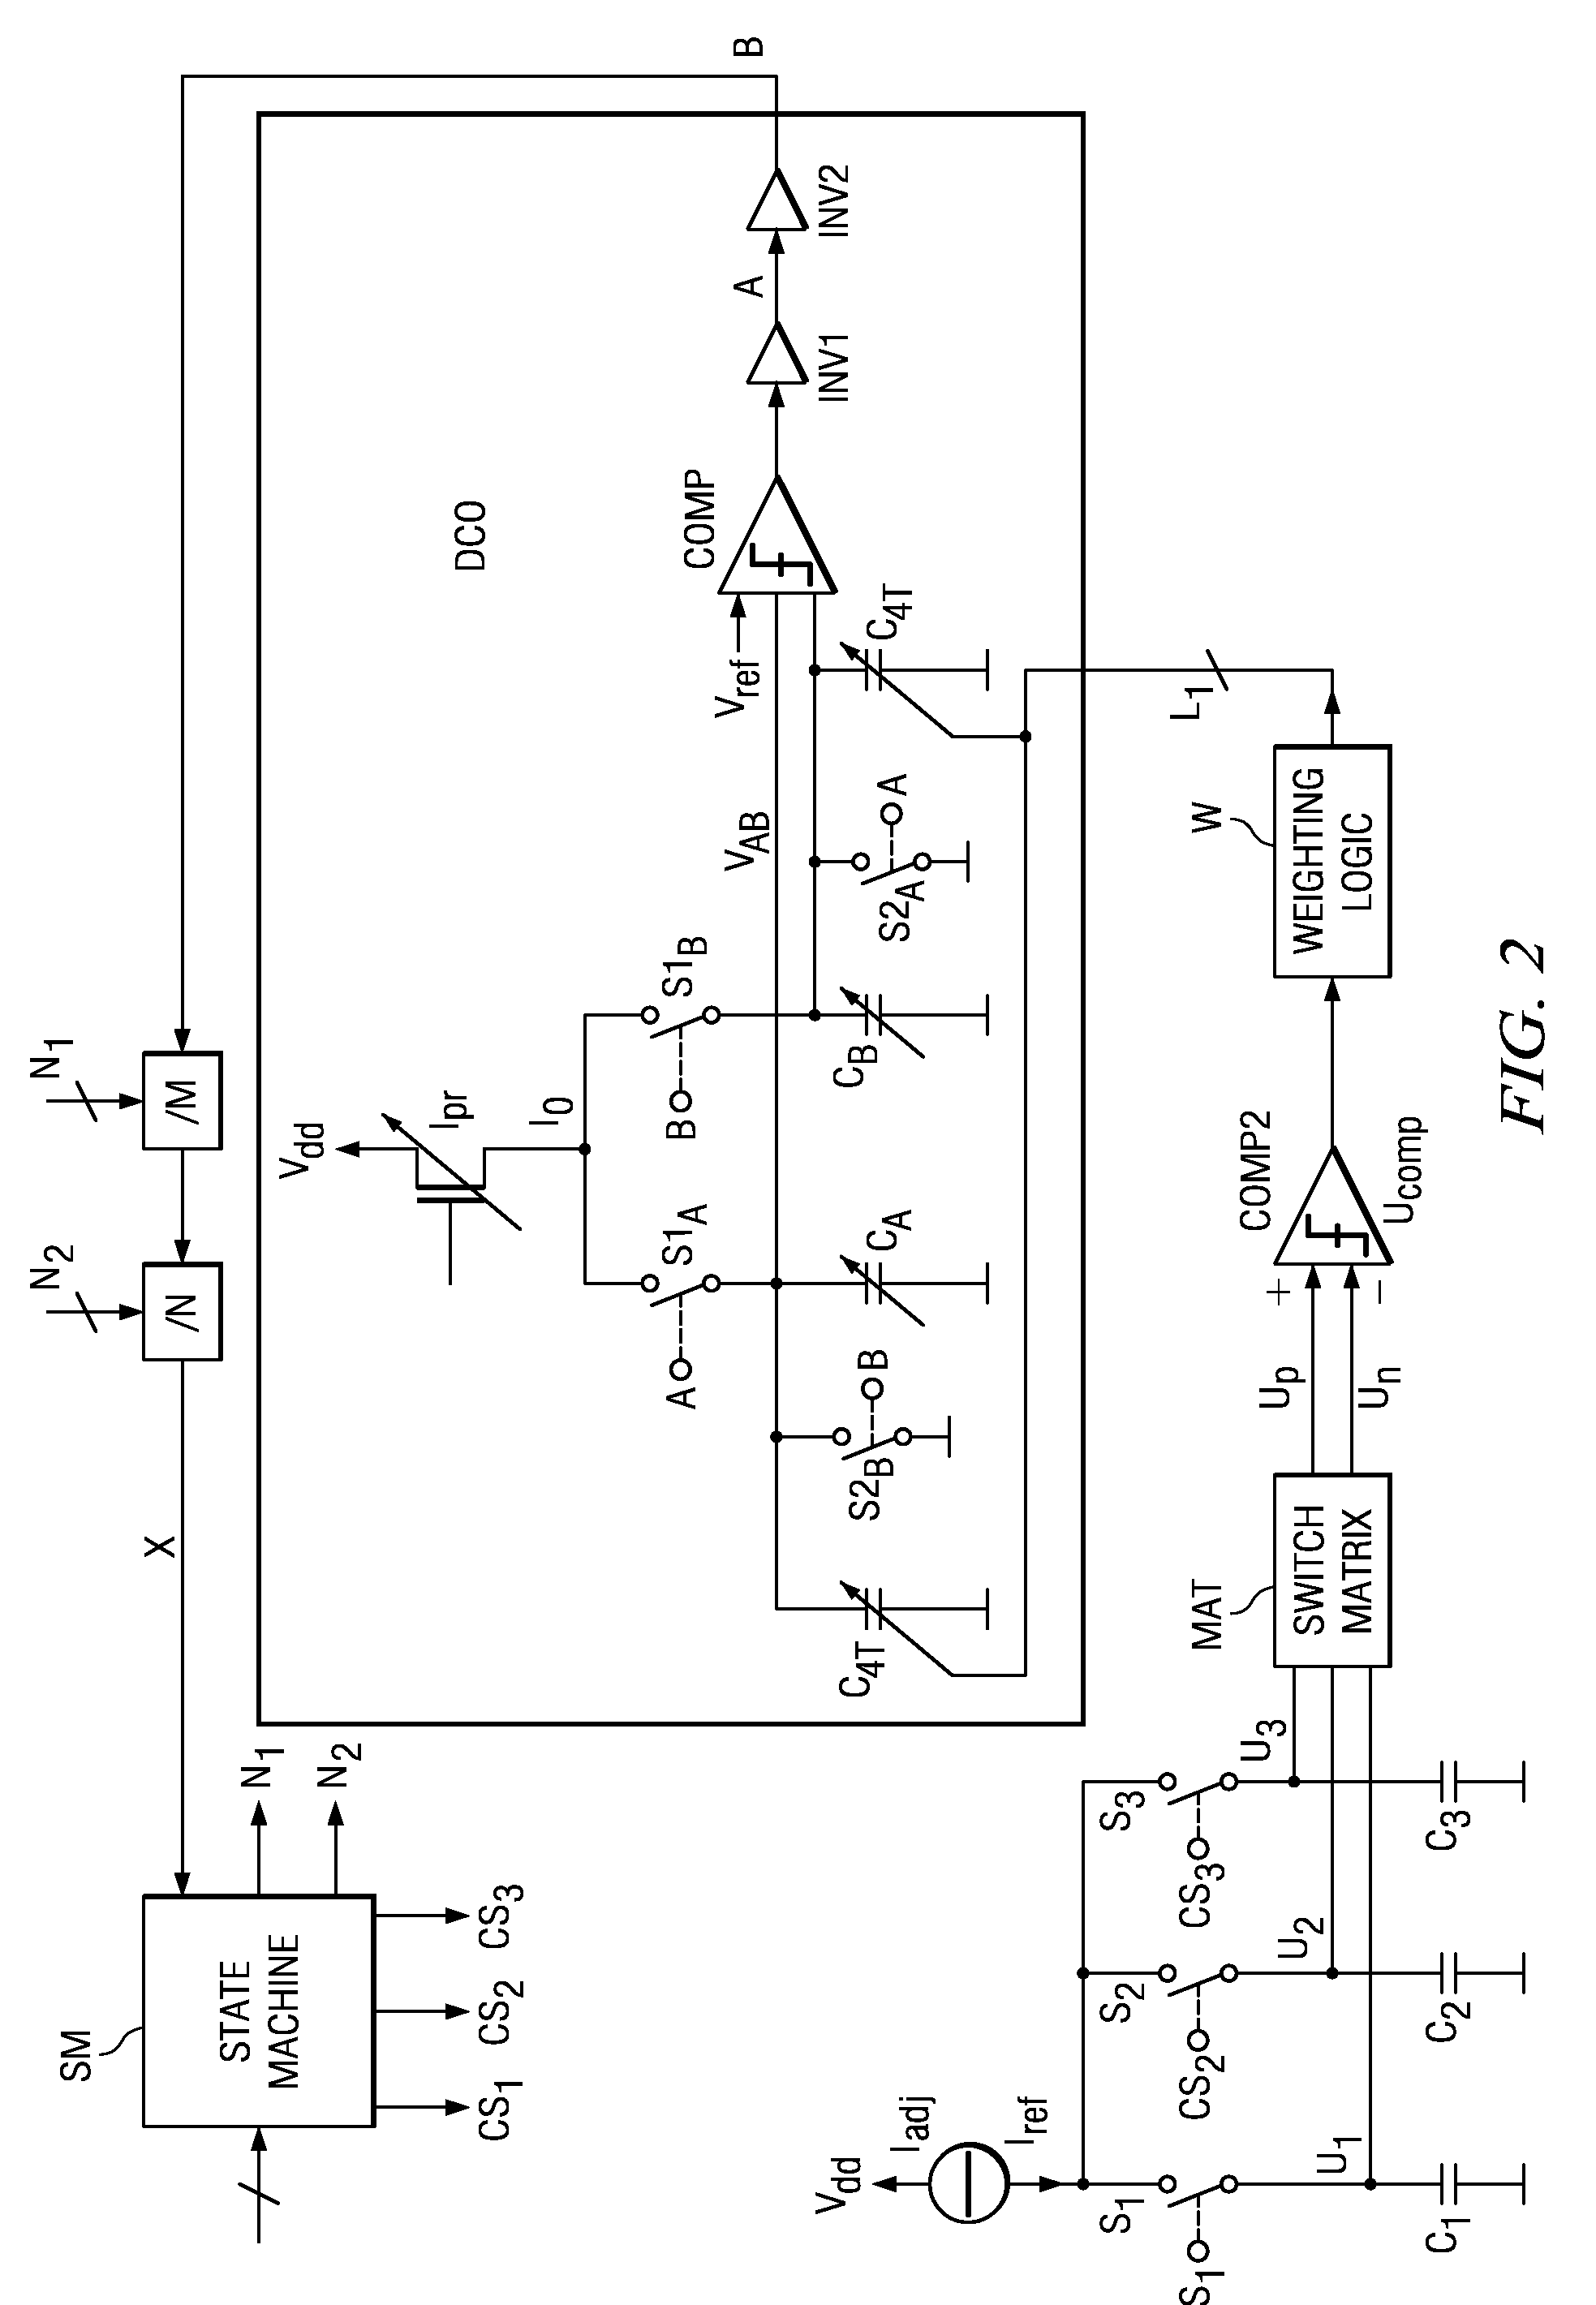 Digital Controlled Oscillator